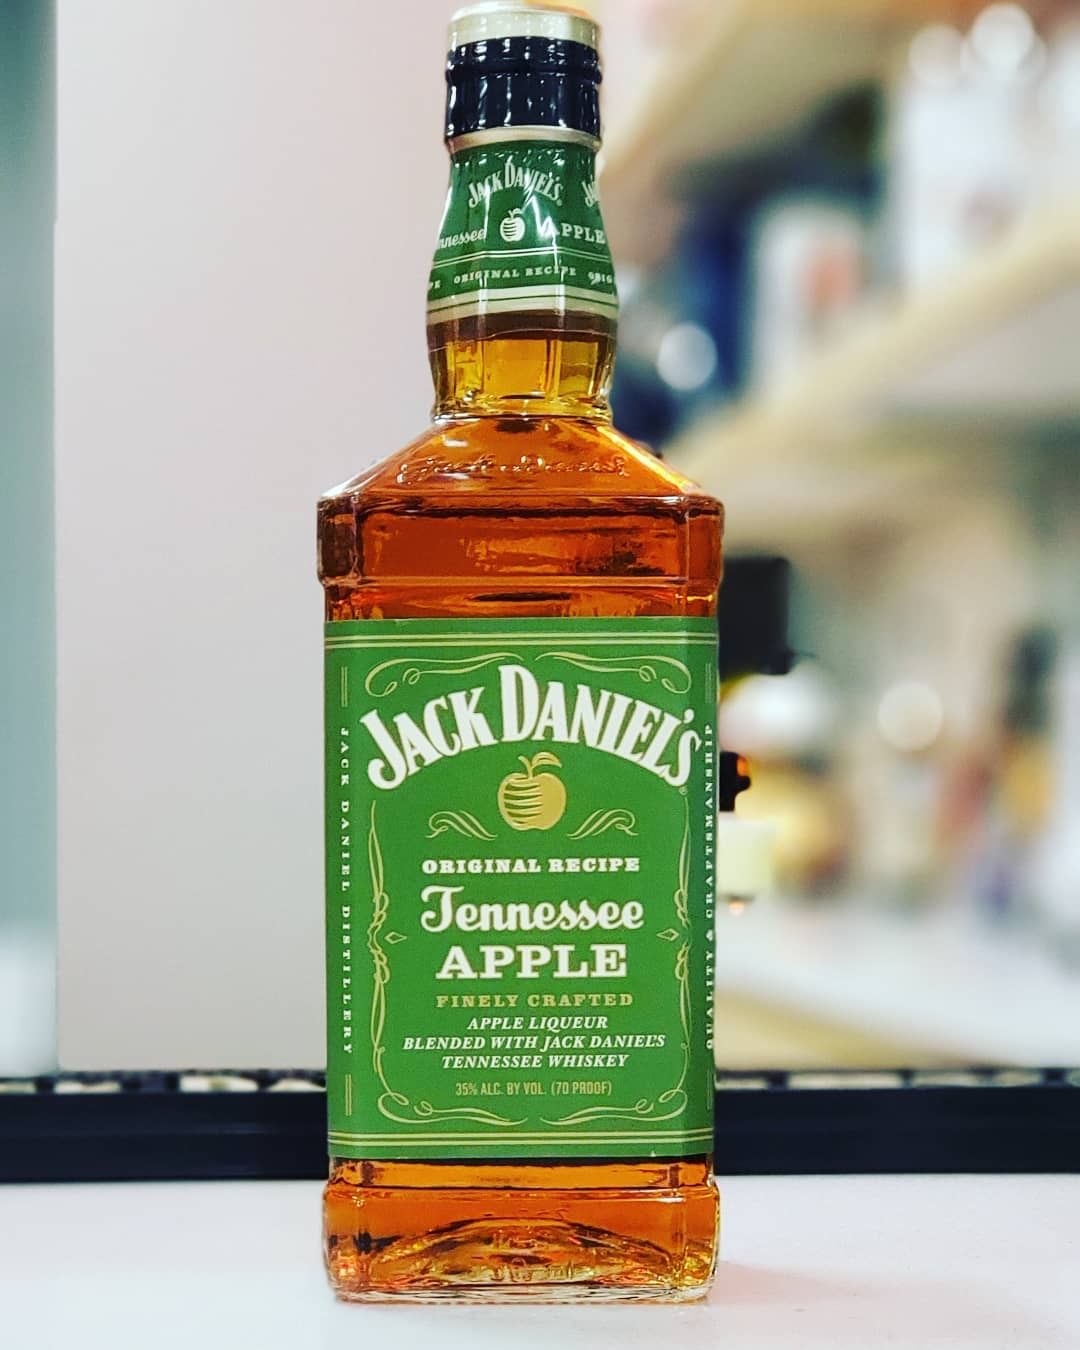 Jack Daniels, Tennessee Apple whiskey.